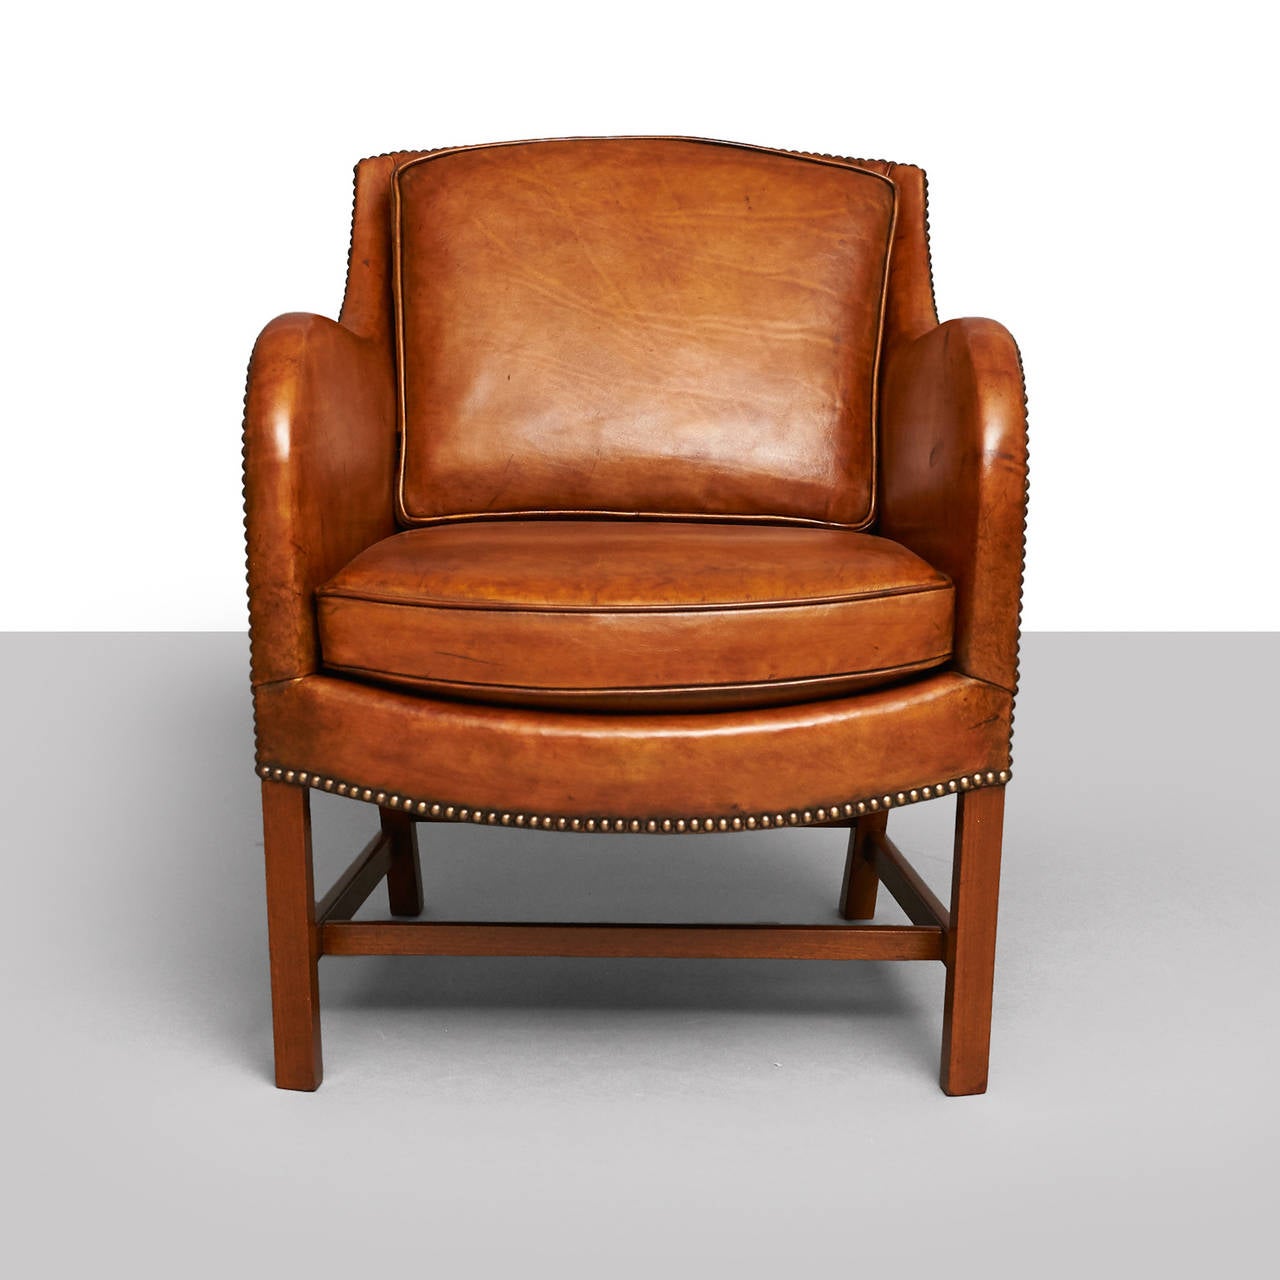 A Kaare Klint and Edvard Kindt-Larsen lounge chair of Cuban mahogany. Restored in antiqued leather. Designed in 1936, produced by Rud. Rasmussens Snedkerier in the 1940s.

Literature: 'Dansk møbelkunst gennem 40 aar: Københavns Snedkerlaugs